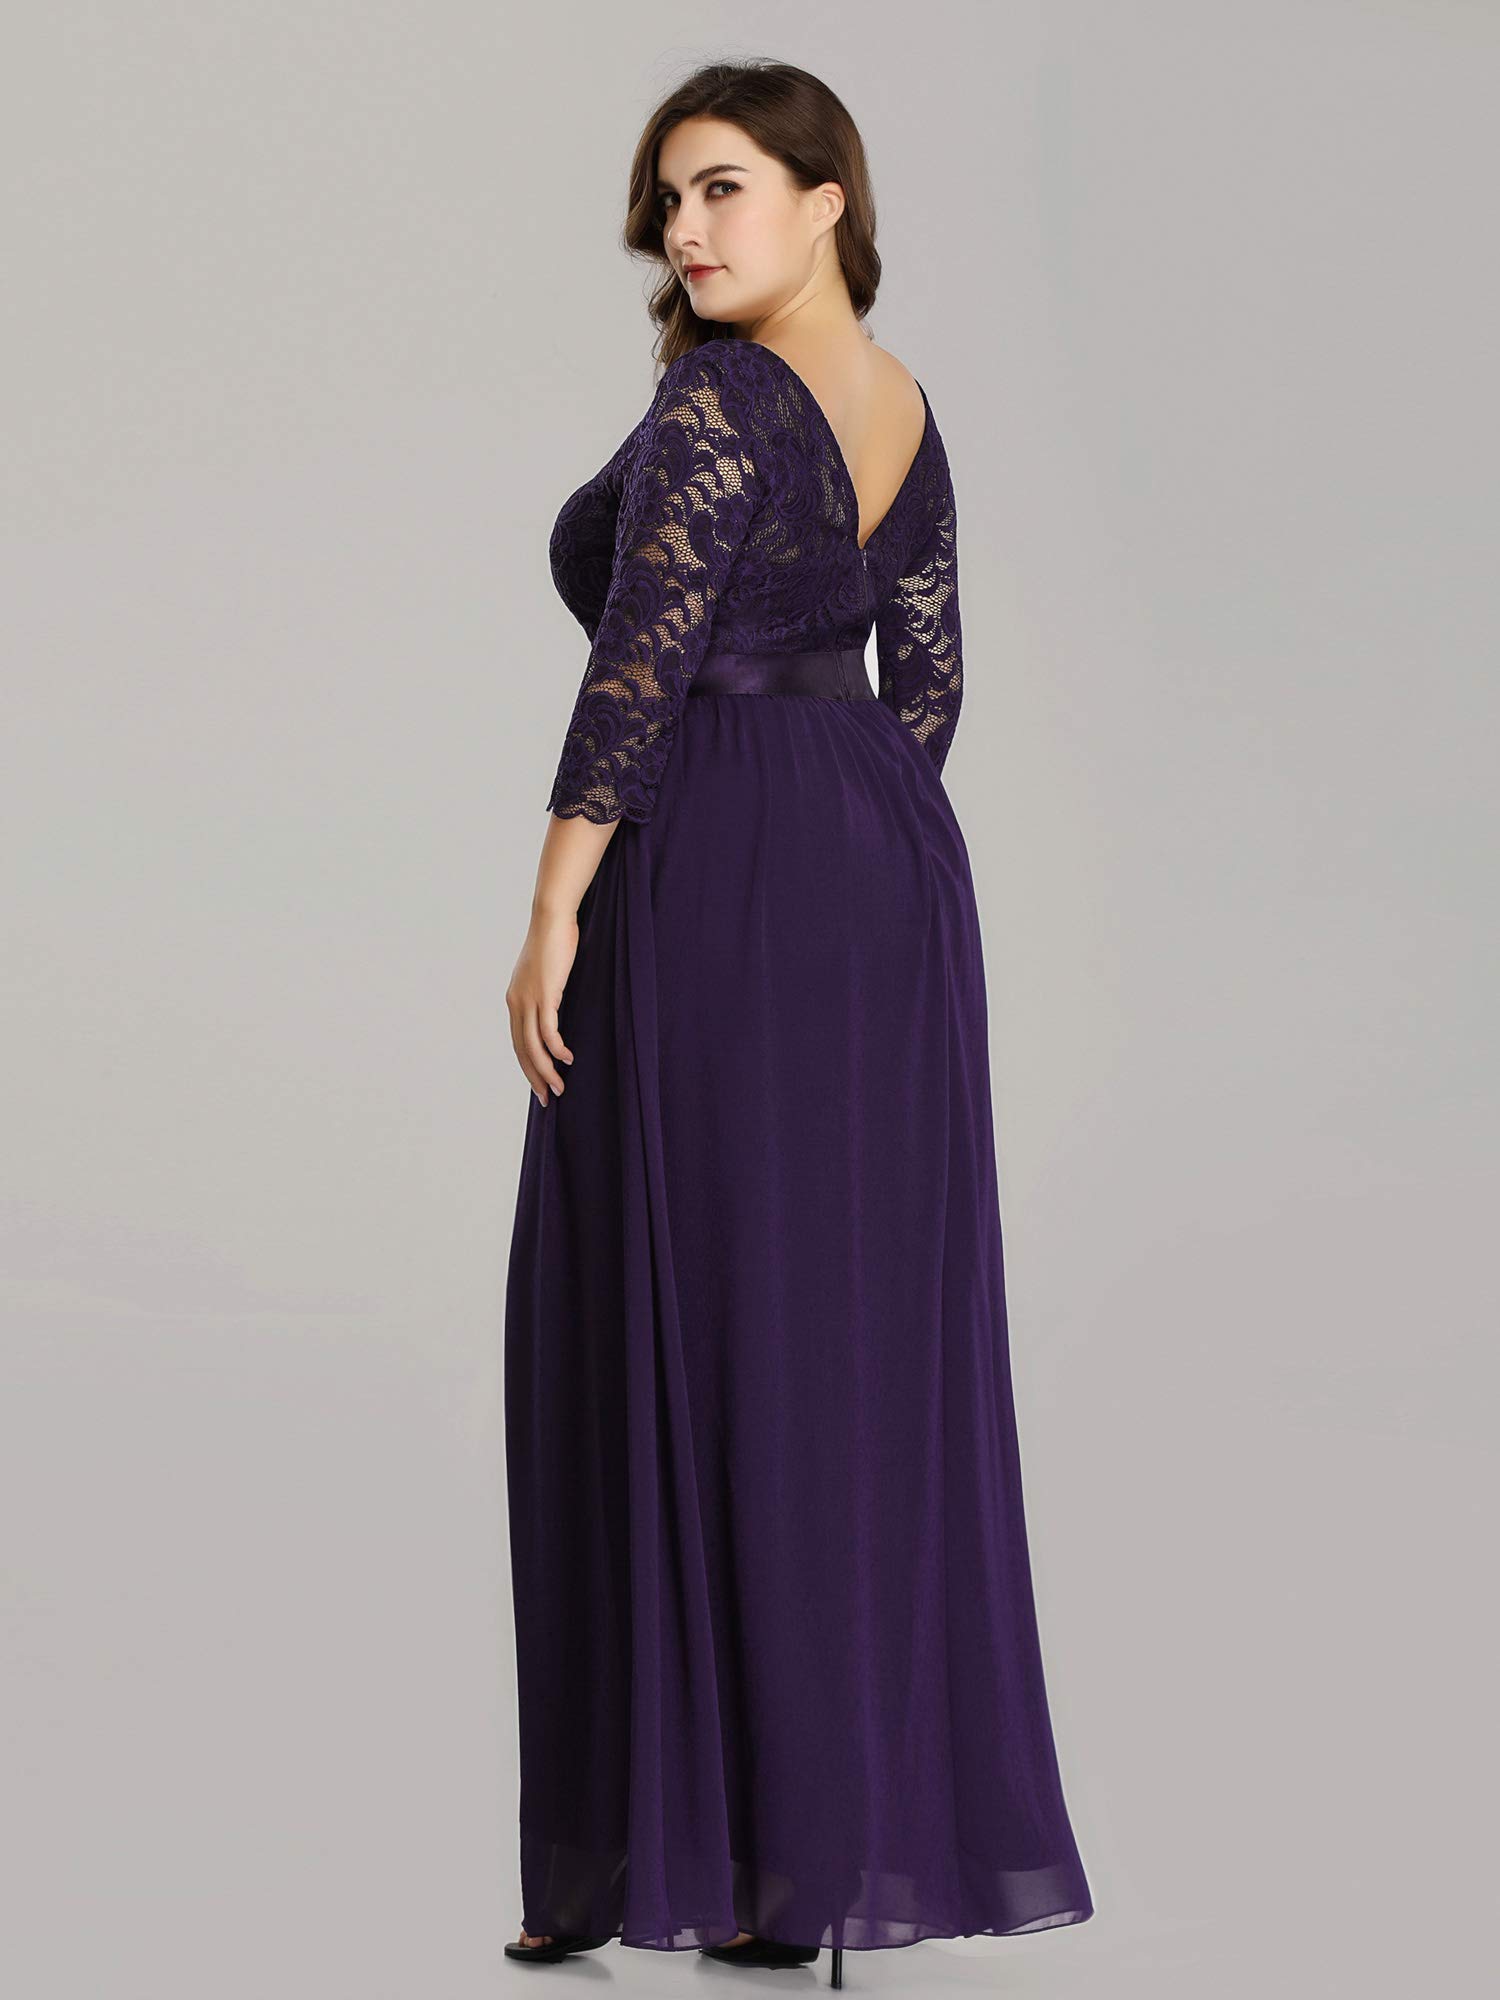 Ever-Pretty Womens Plus Size Lace Evening Formal Dress Elegant Lace Dresses Dark Purple US 20